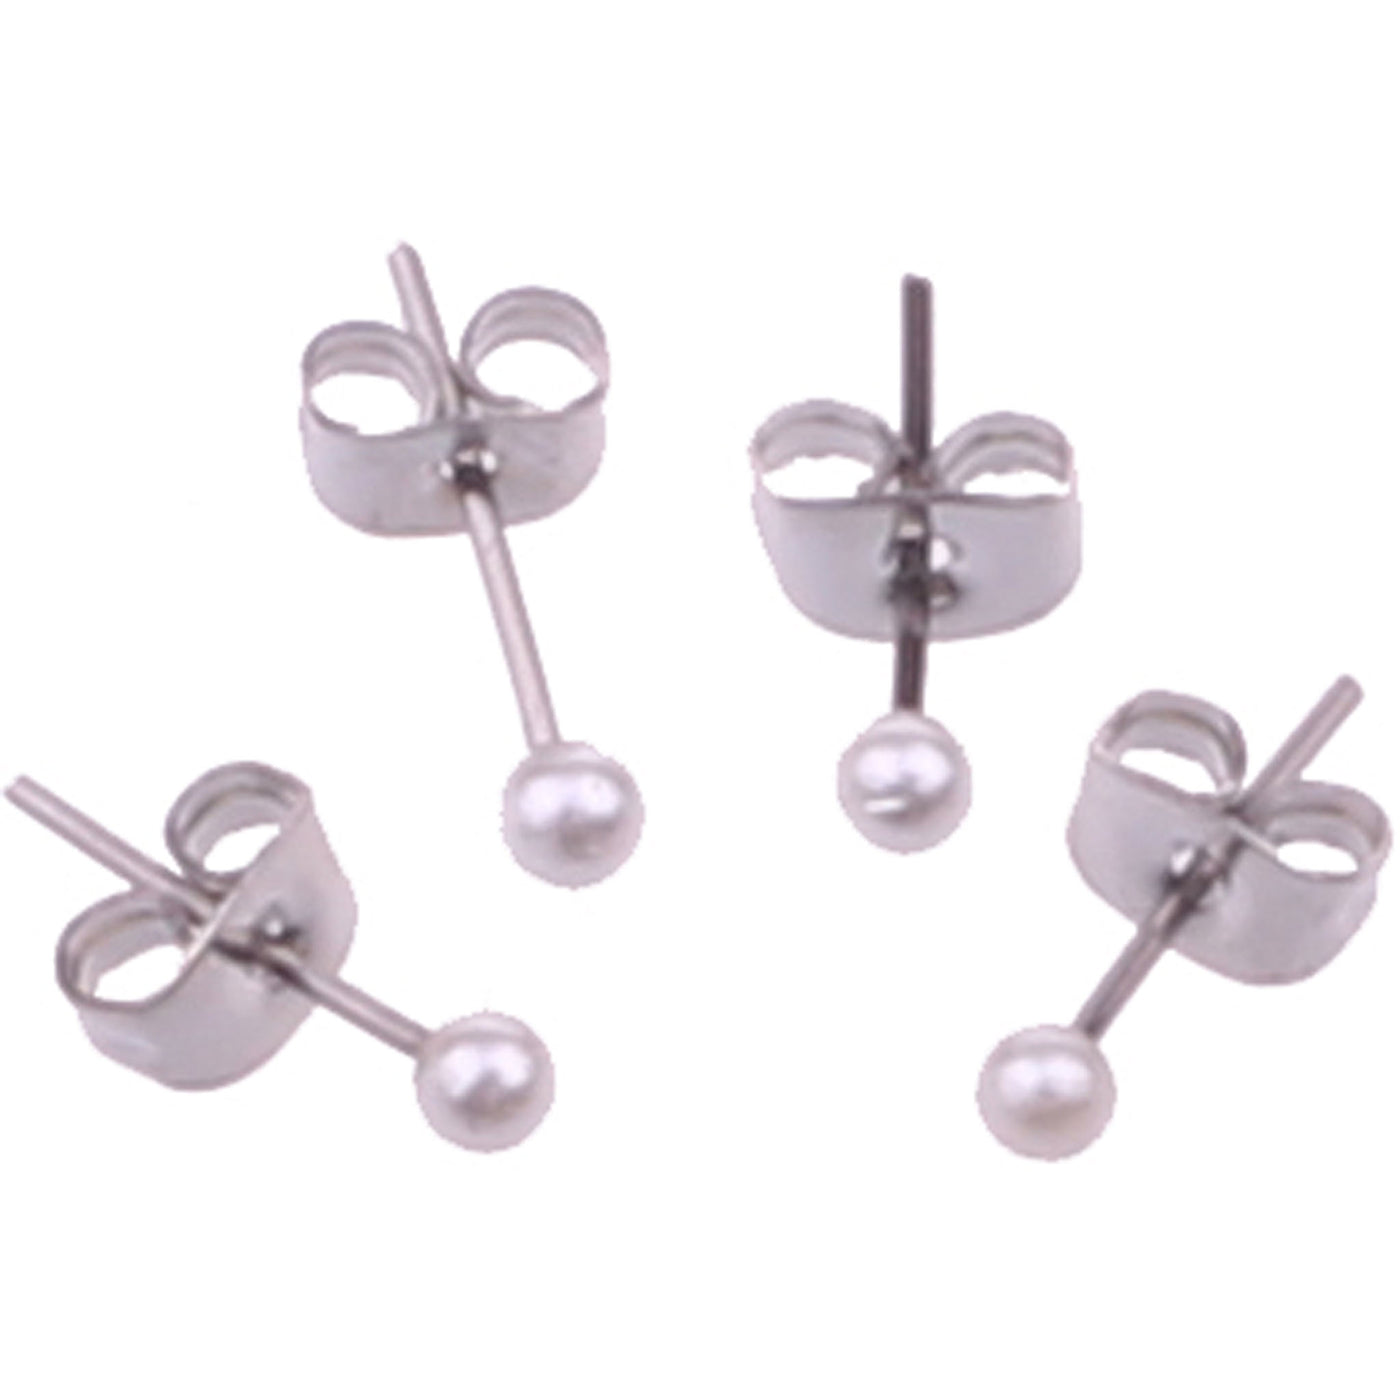 Small pearl earrings 2 pairs